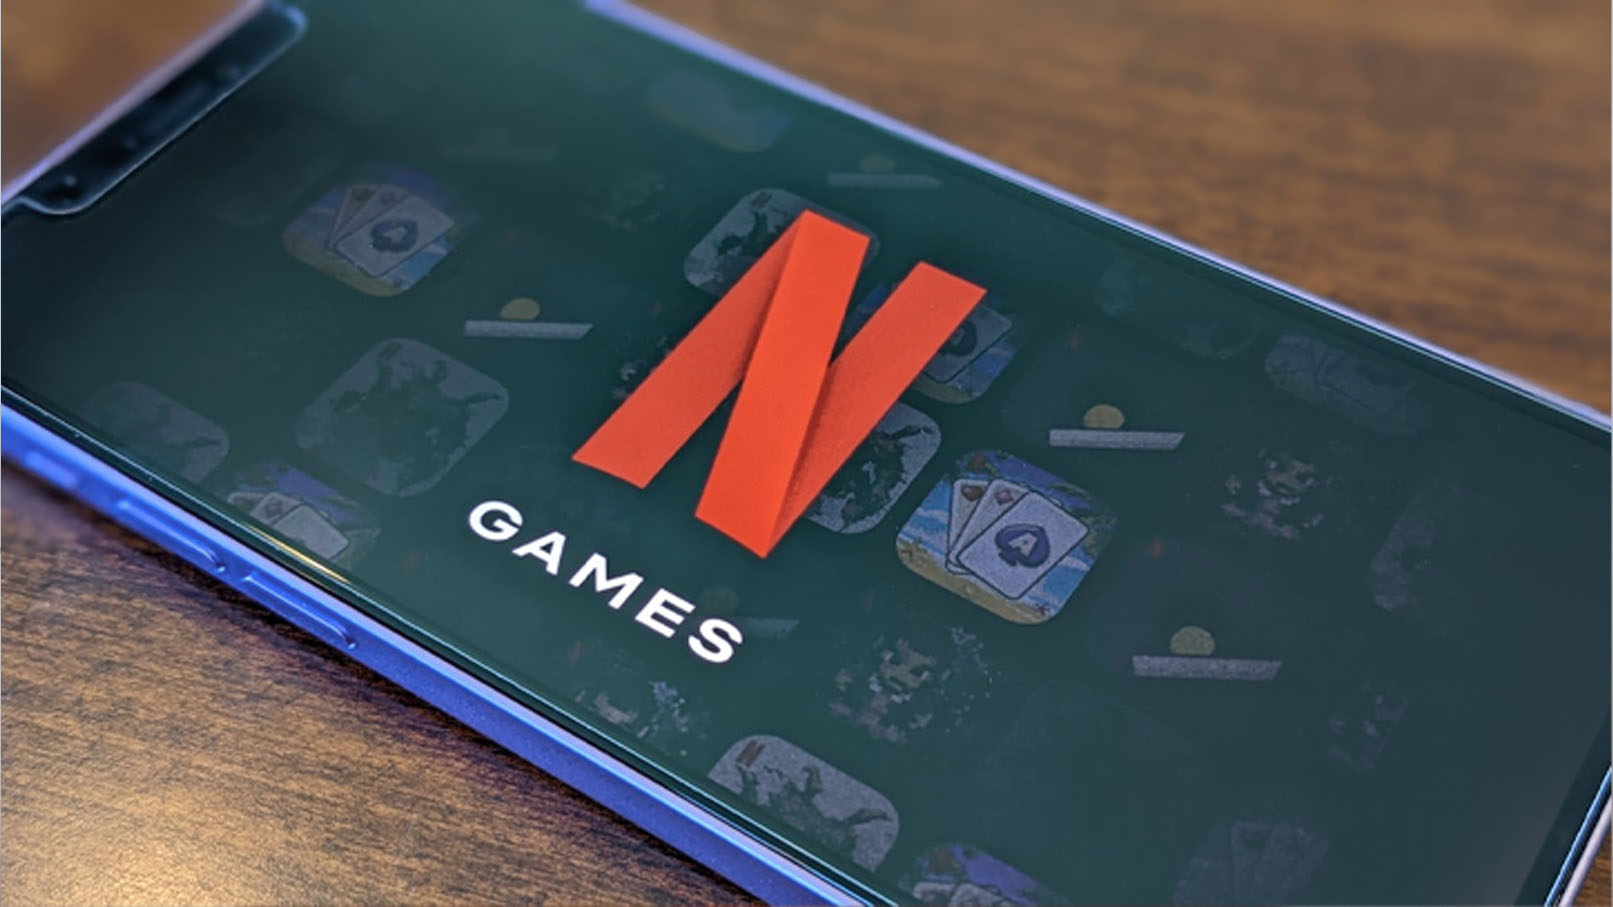 Netflix Games logo on iPhone